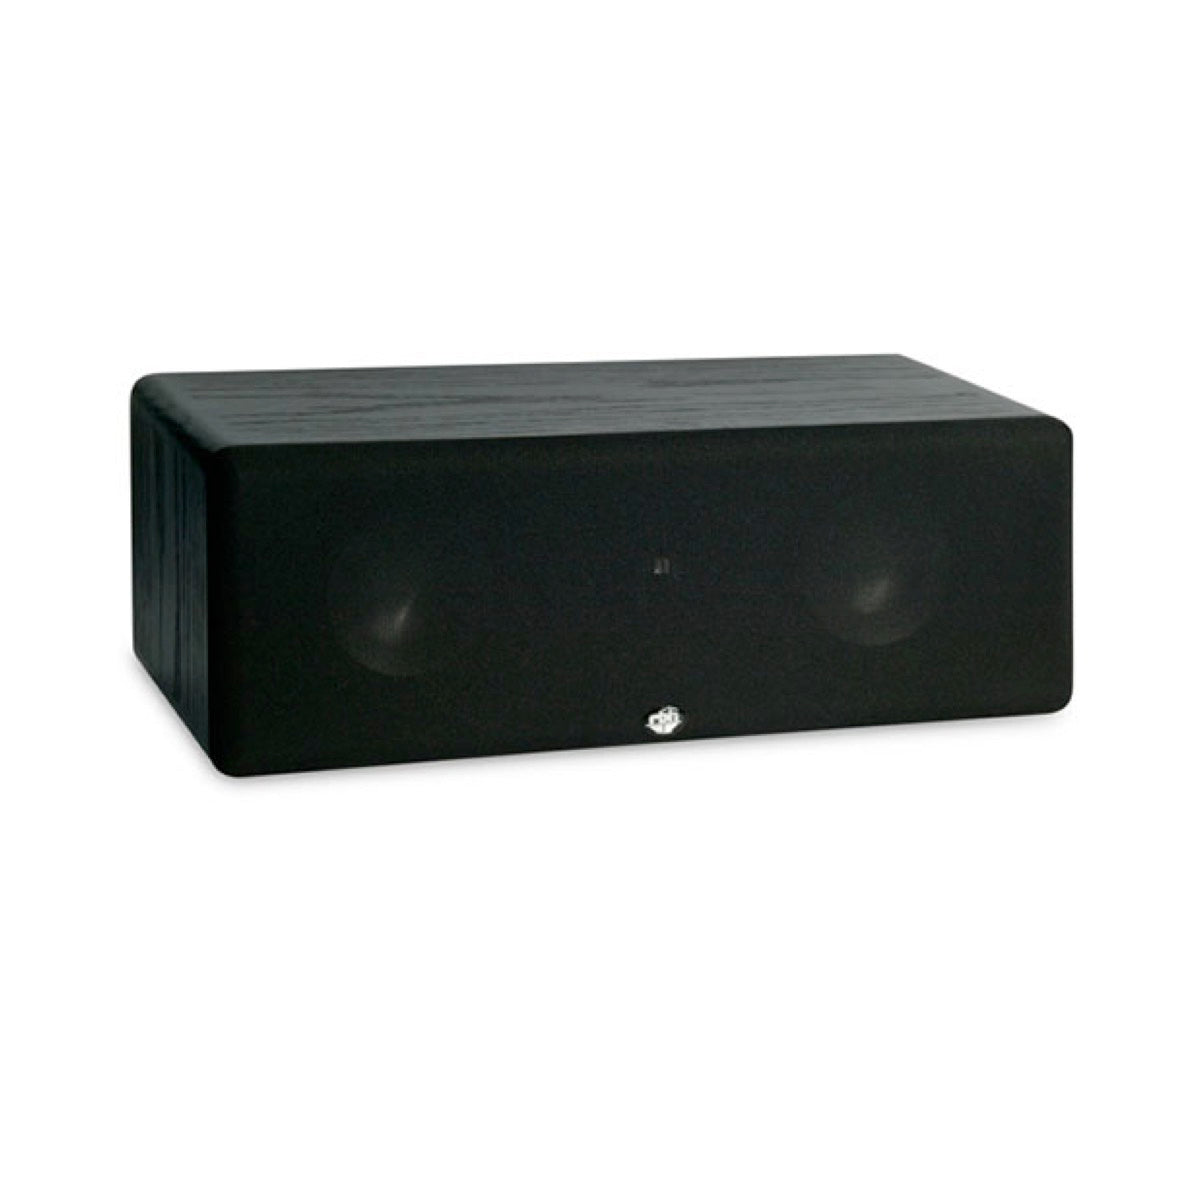 RBH Sound MC-414C - LCR/Centre Speaker - AVStore